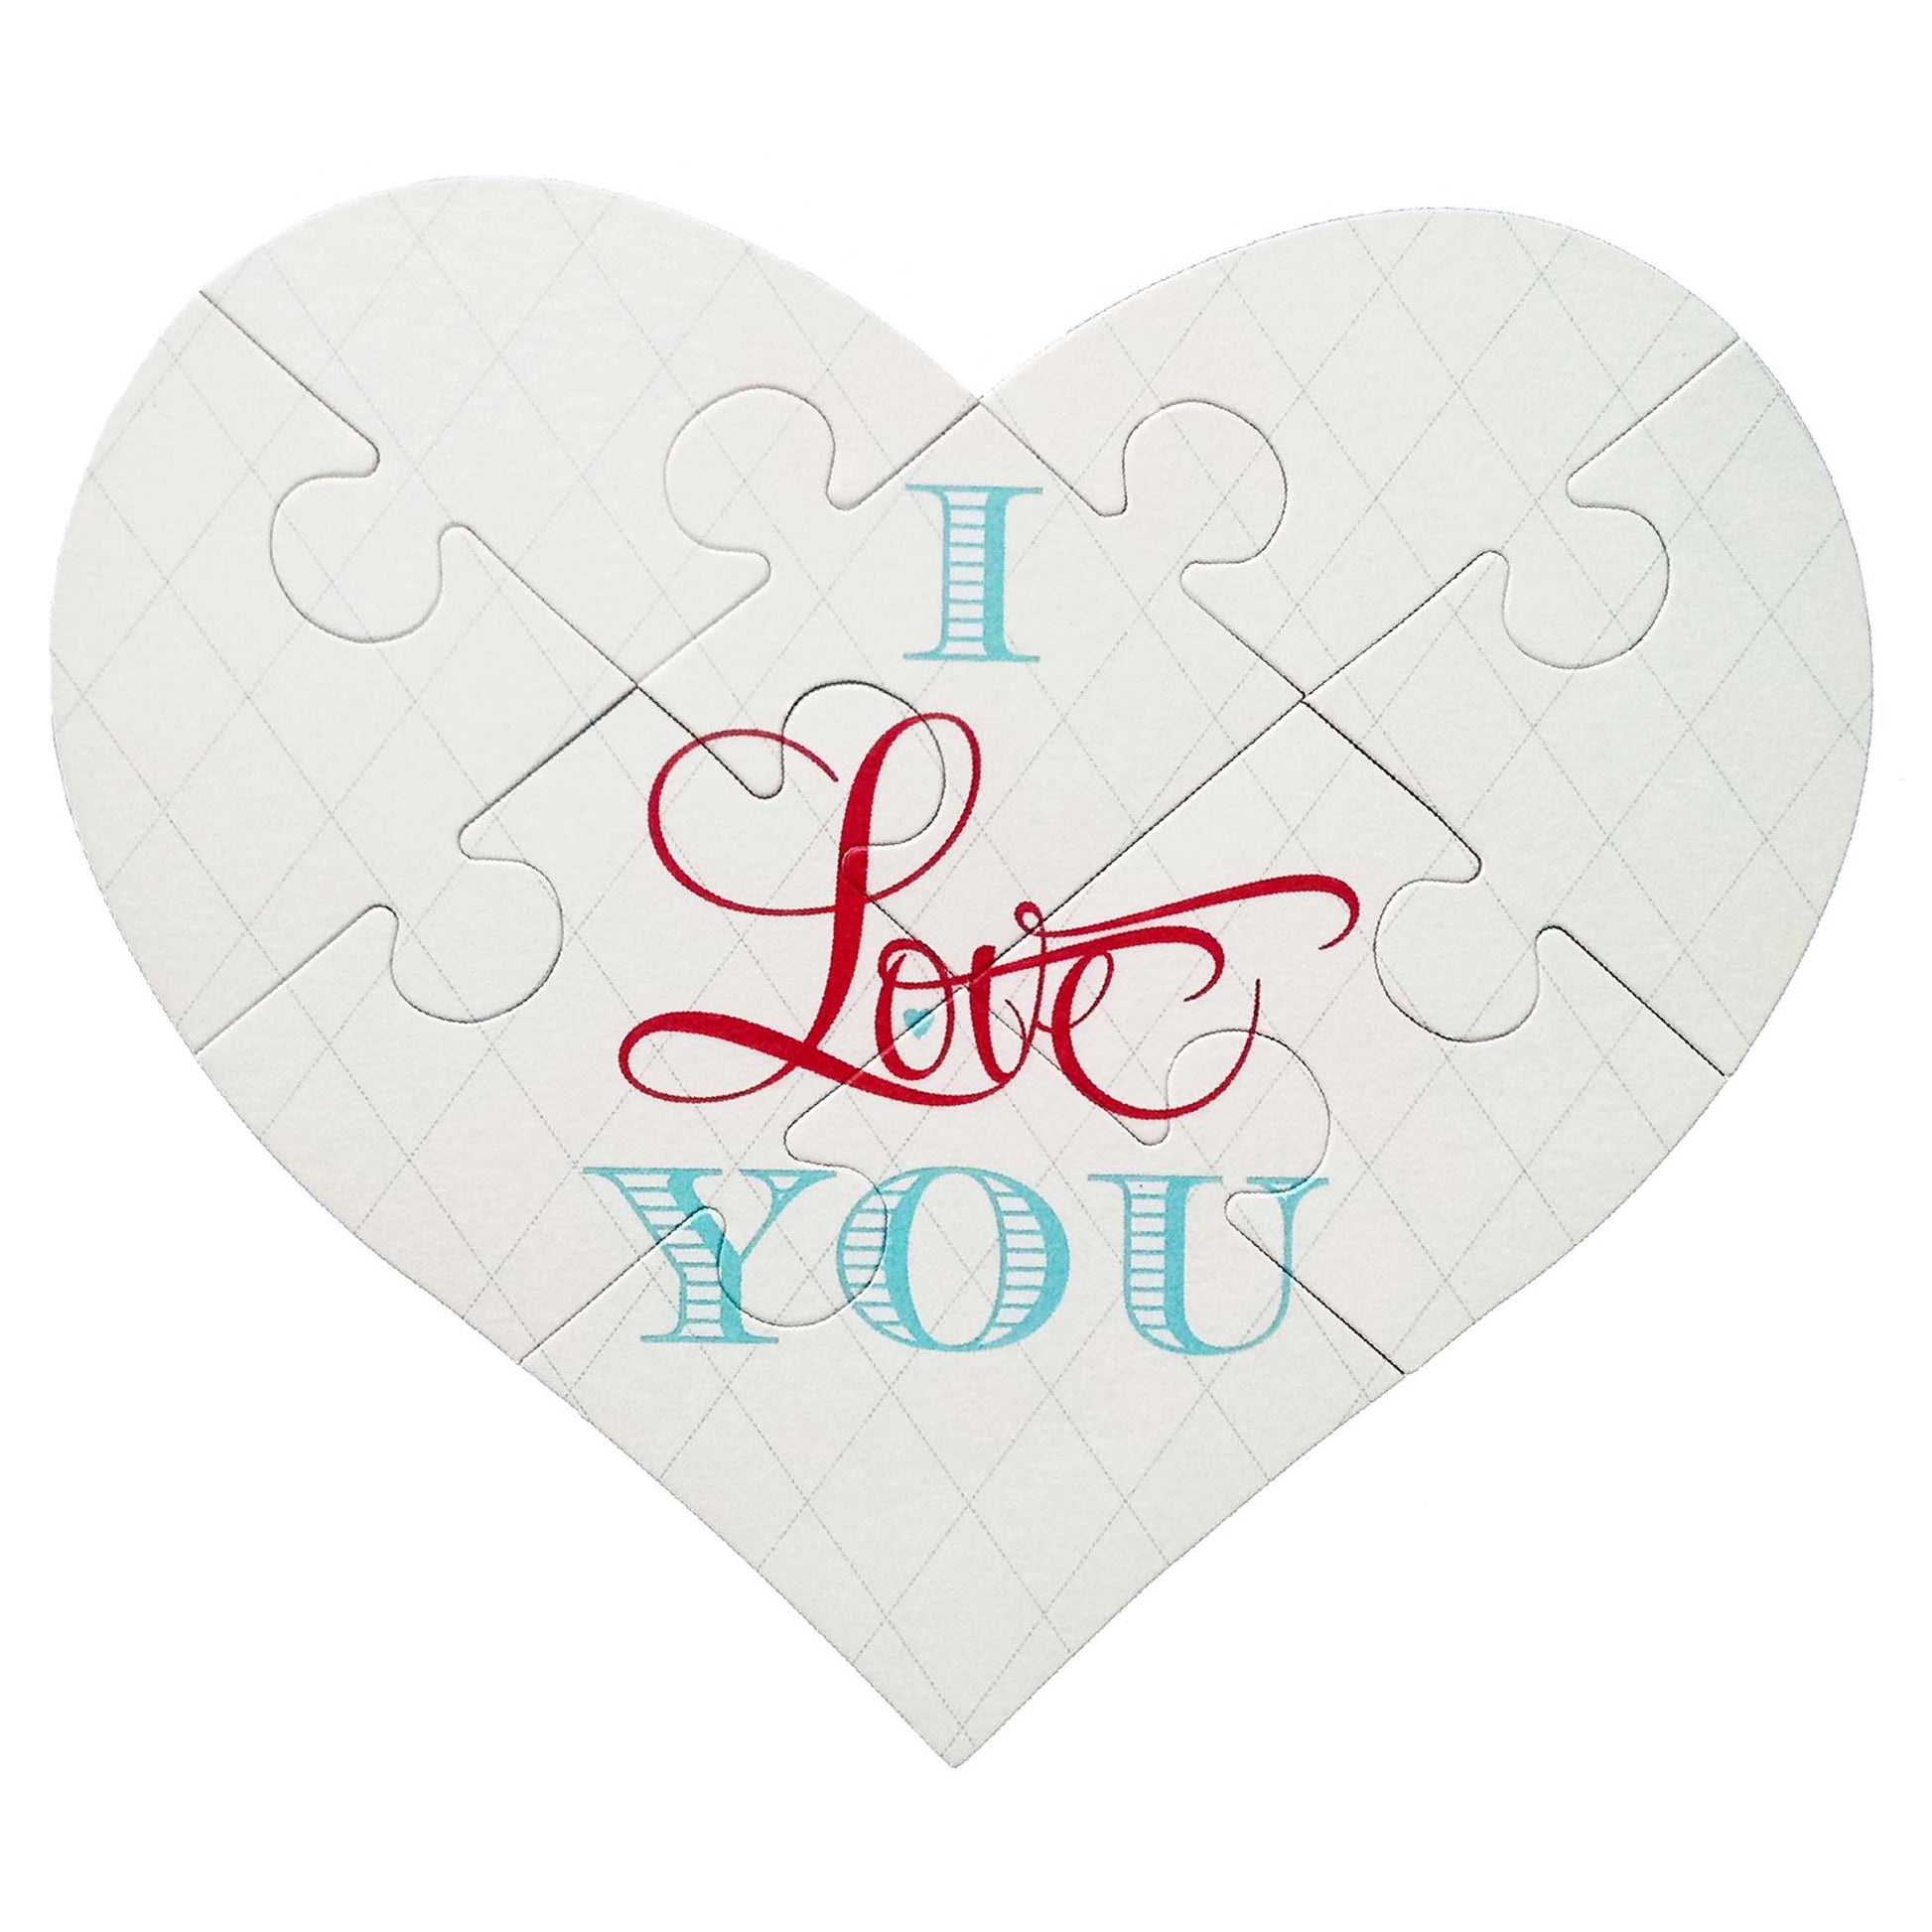 I Love You Heart Puzzle Greeting Card - Idea Chíc